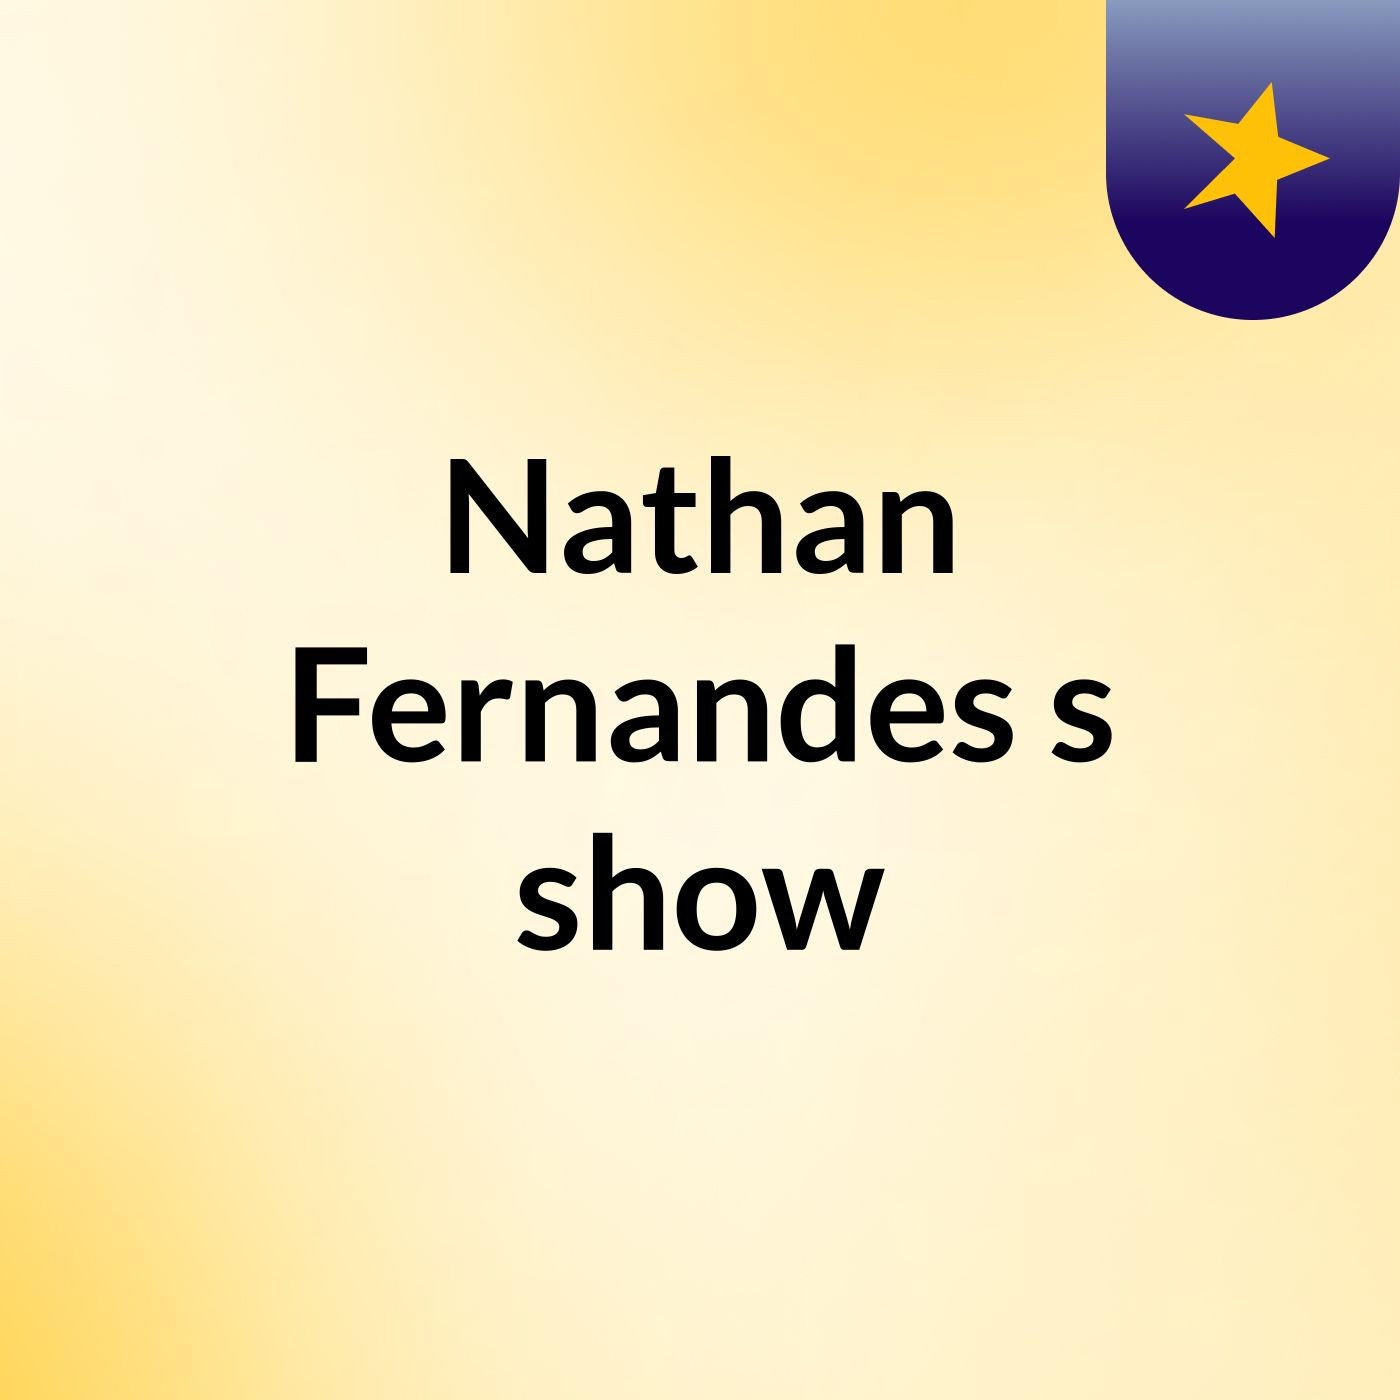 Nathan Fernandes's show